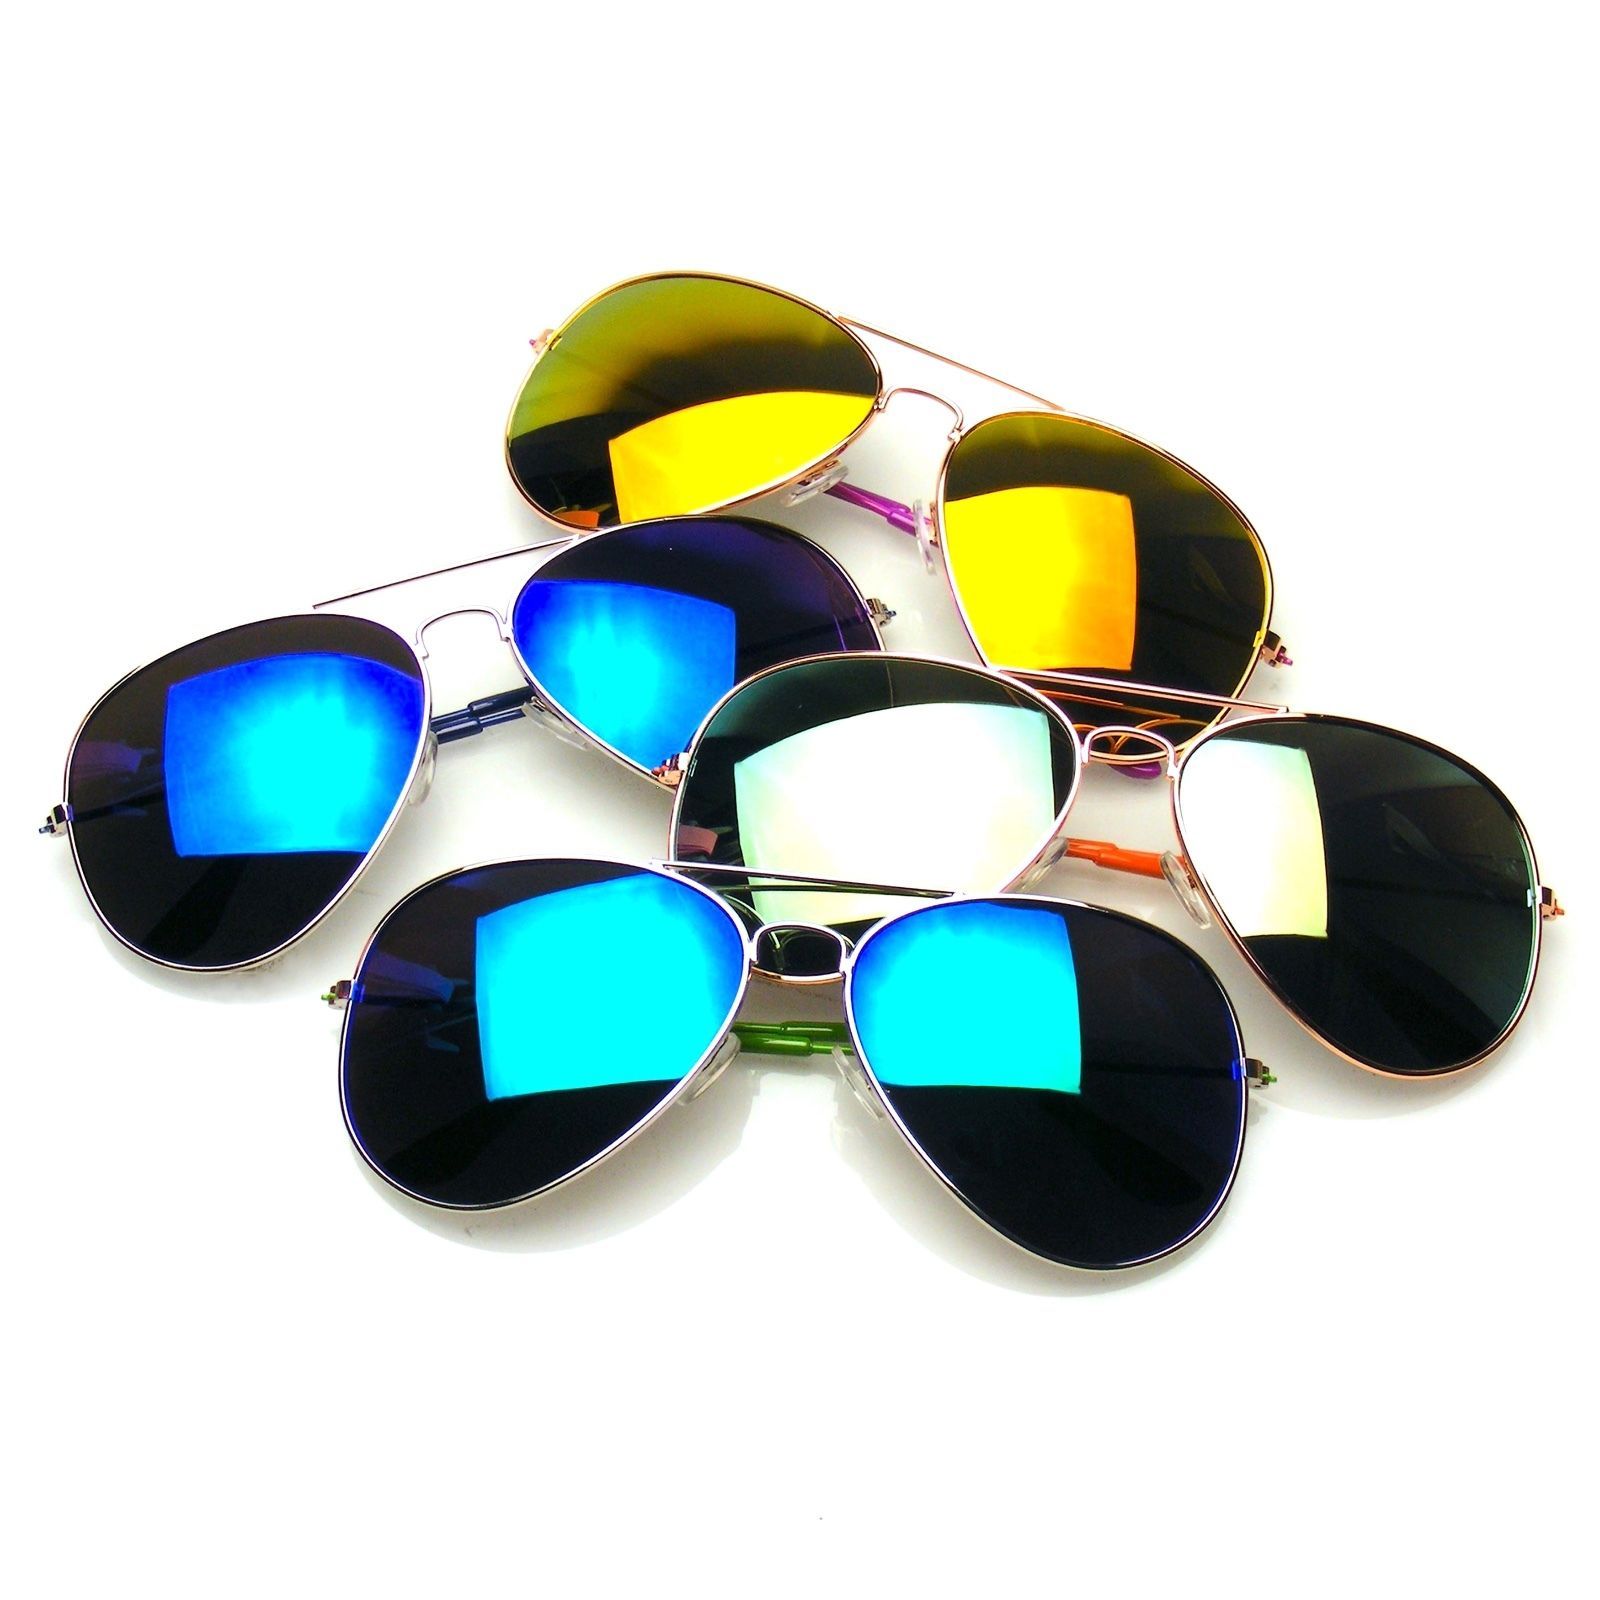 4 Pair Pack BUNDLE Sunglasses Flash Mirror Mirrored Aviator Sunglasses Shades